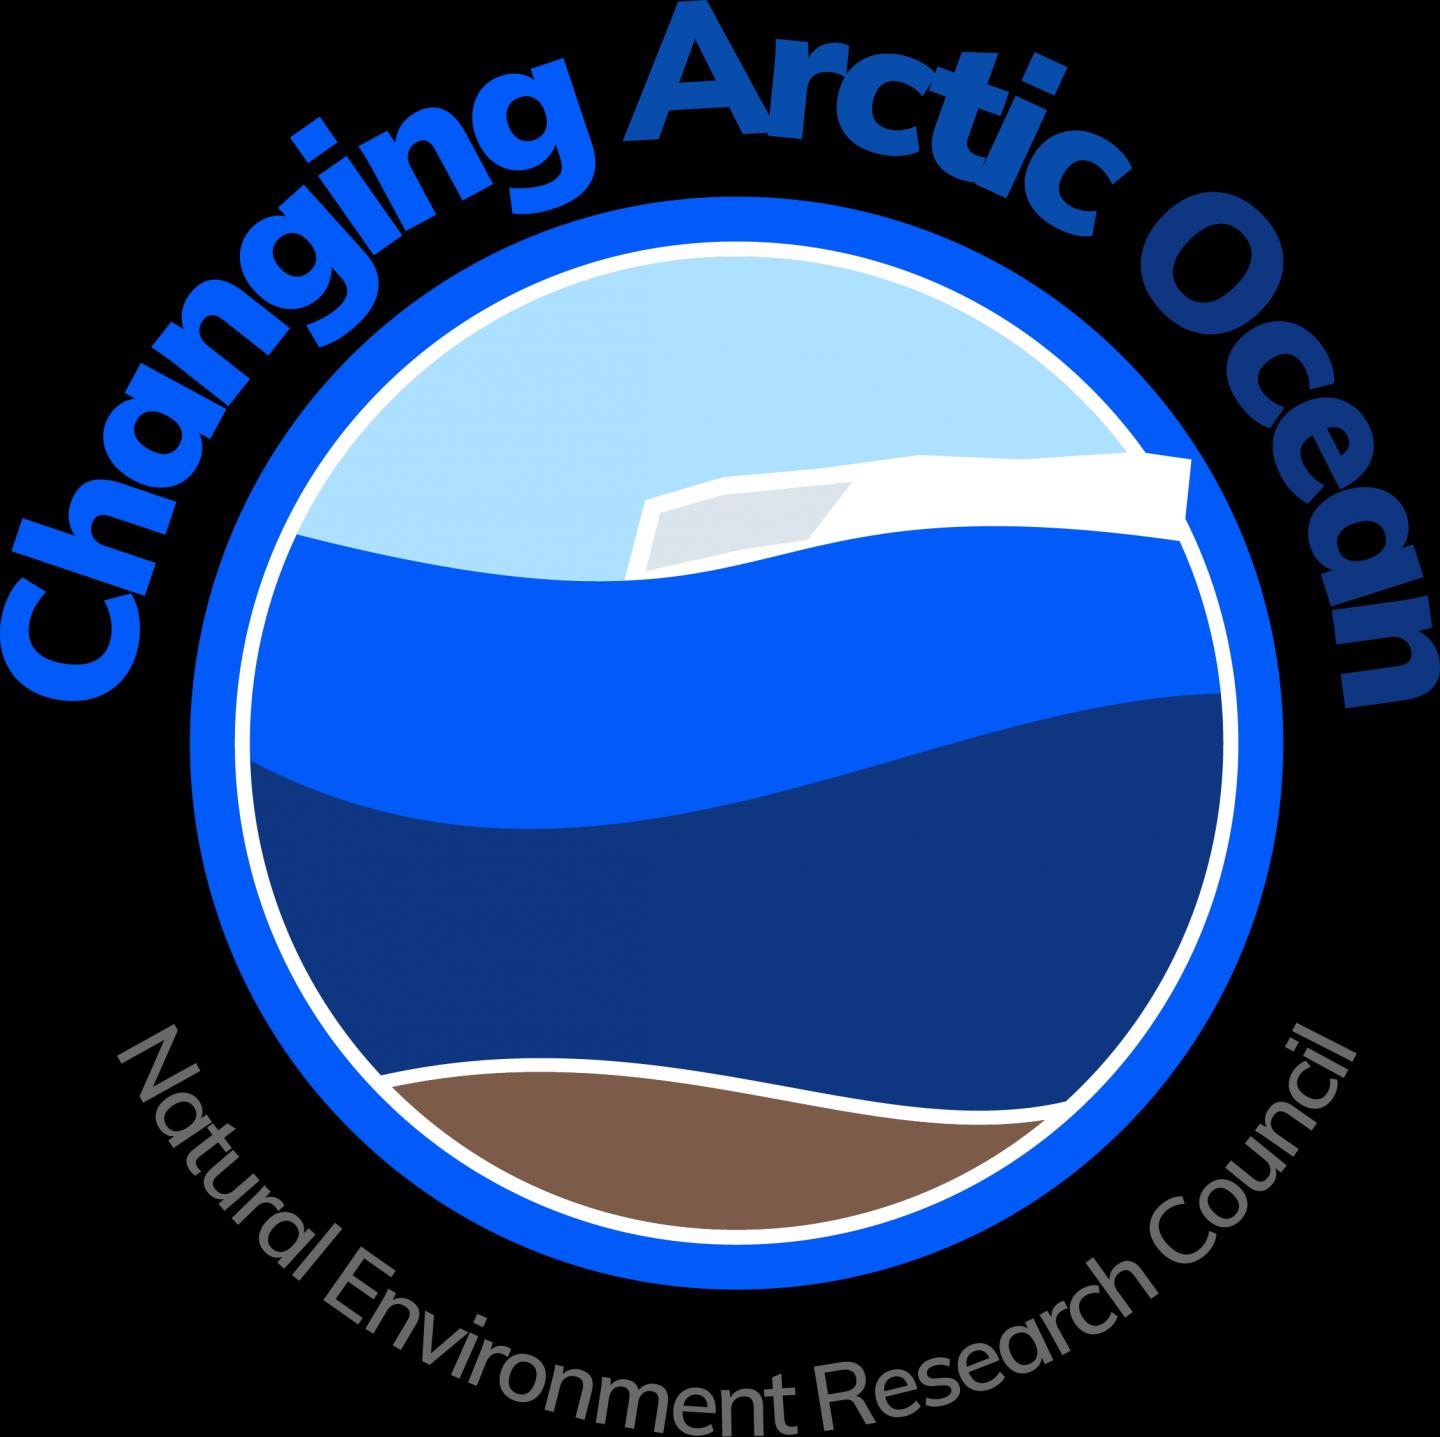 Changing Arctic Ocean Logo